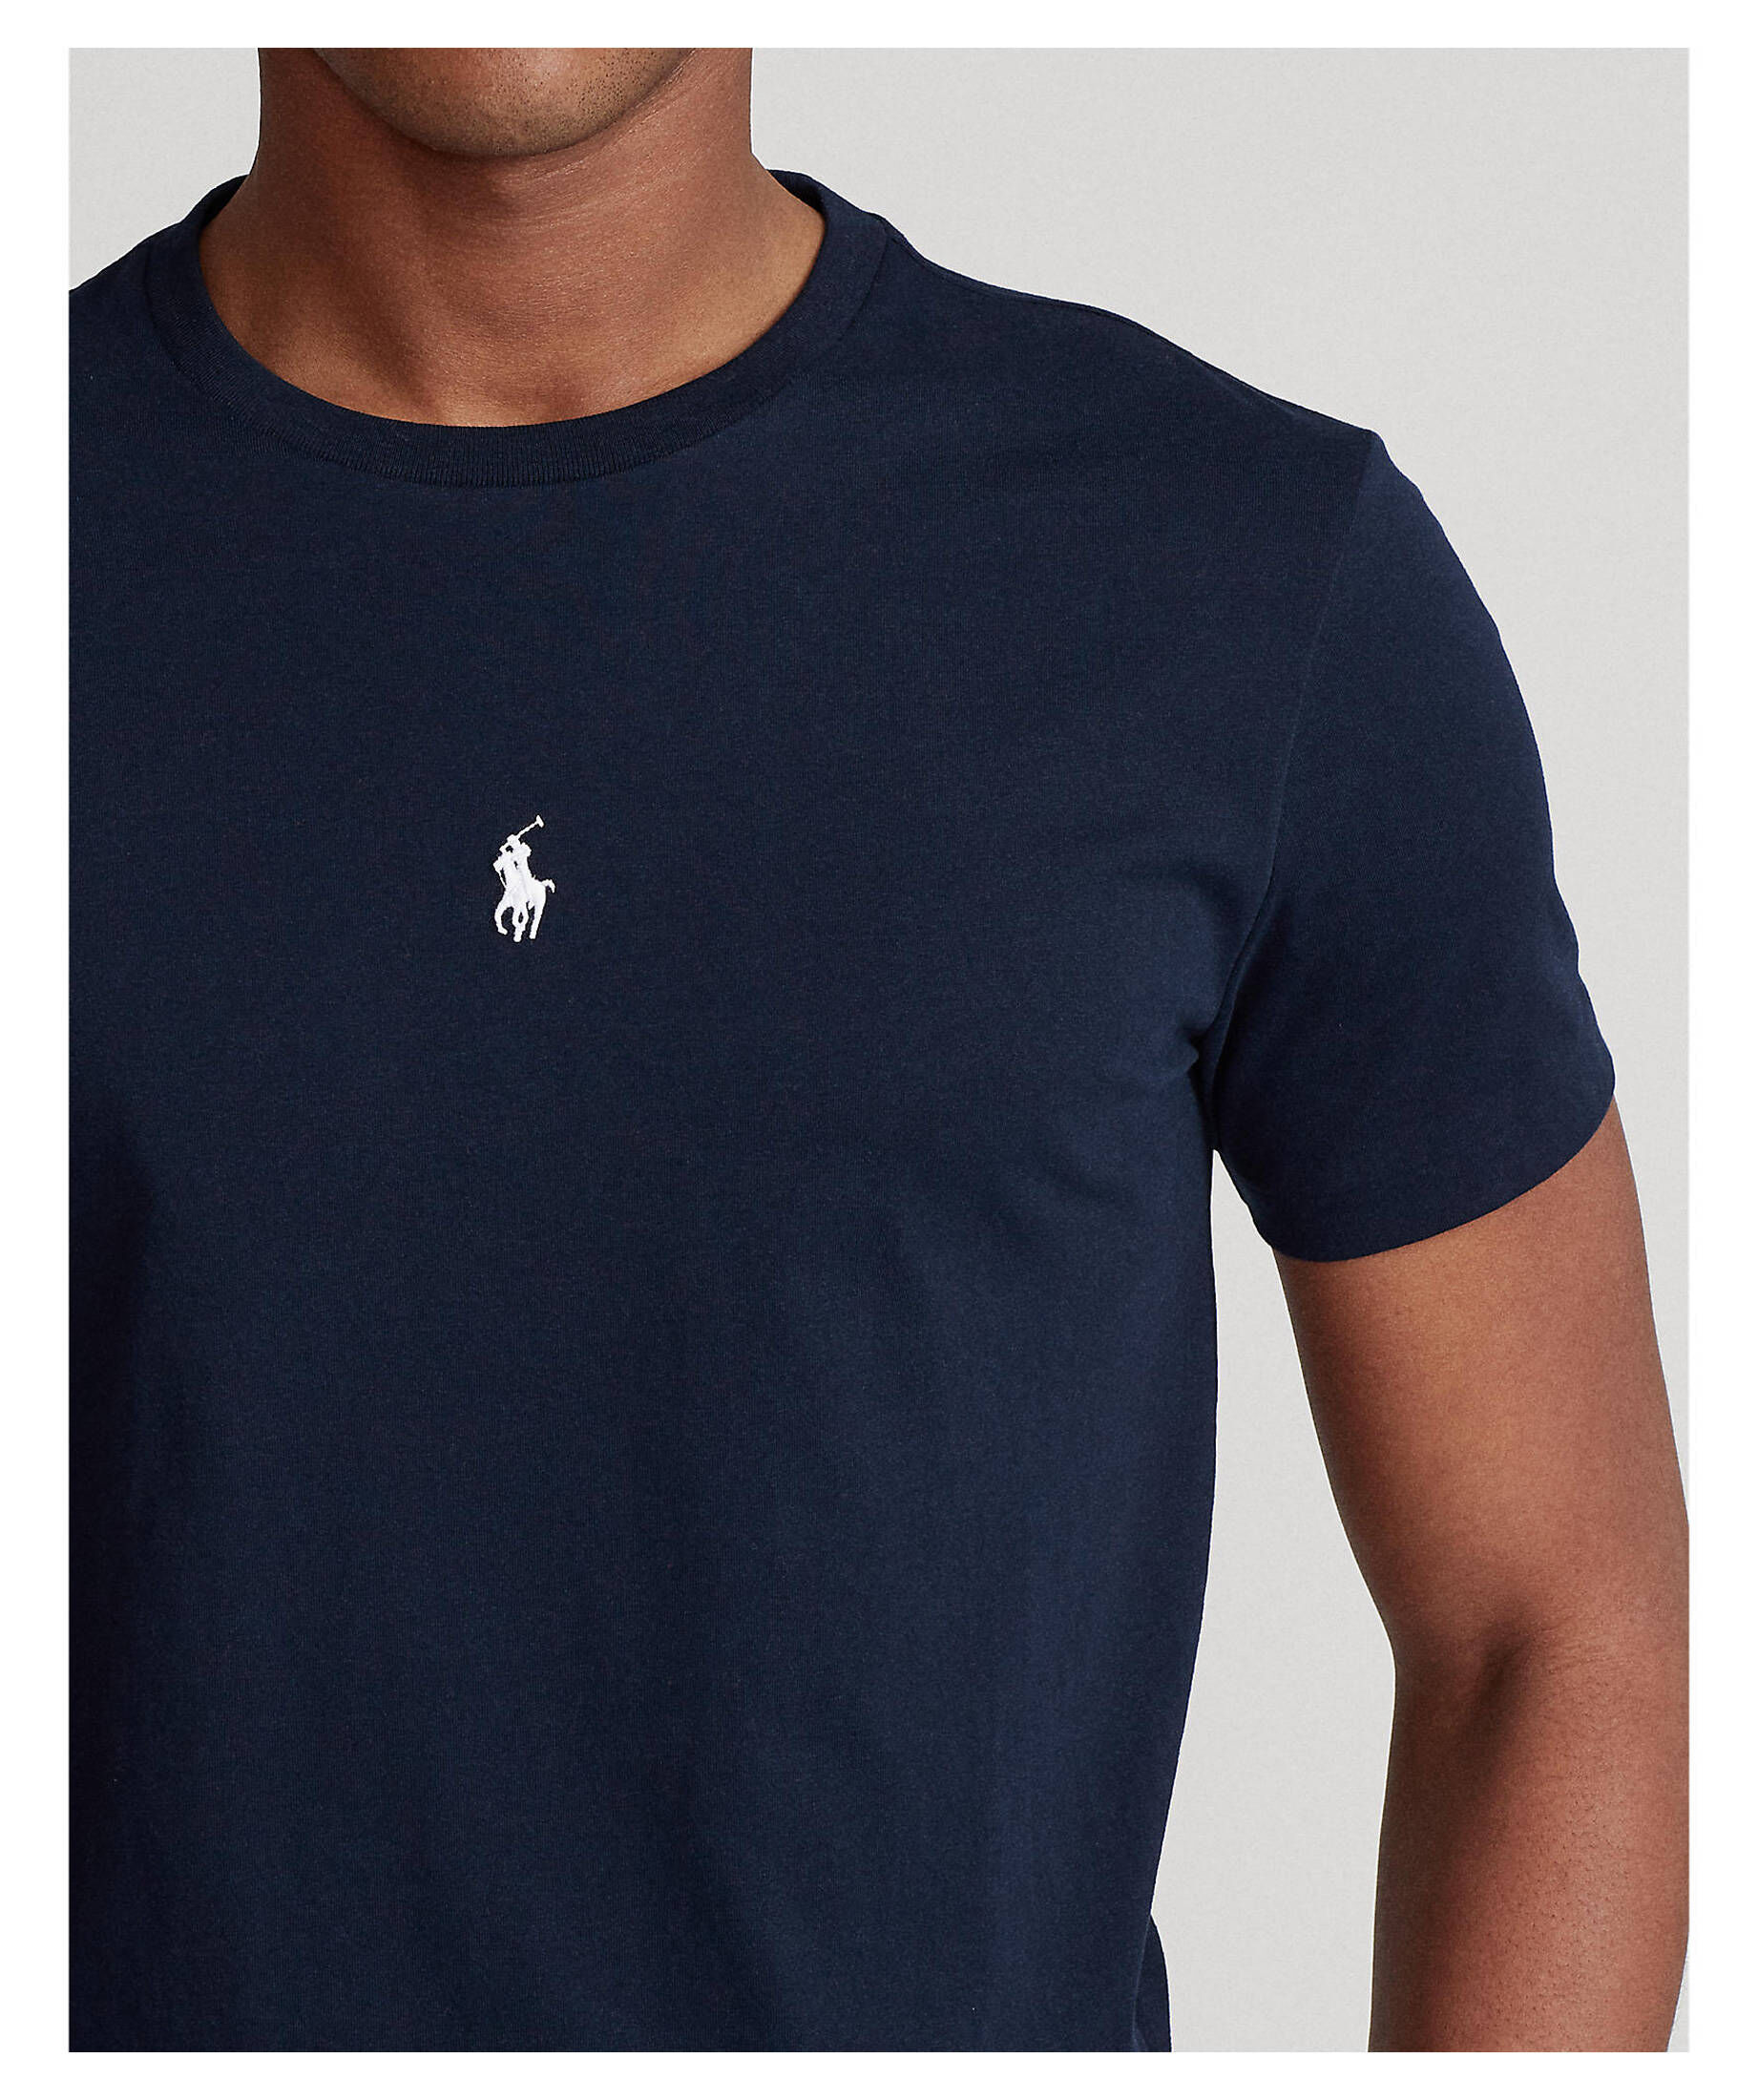 Stadion Festival USA Polo Ralph Lauren Herren T-Shirt Slim Fit kaufen | engelhorn